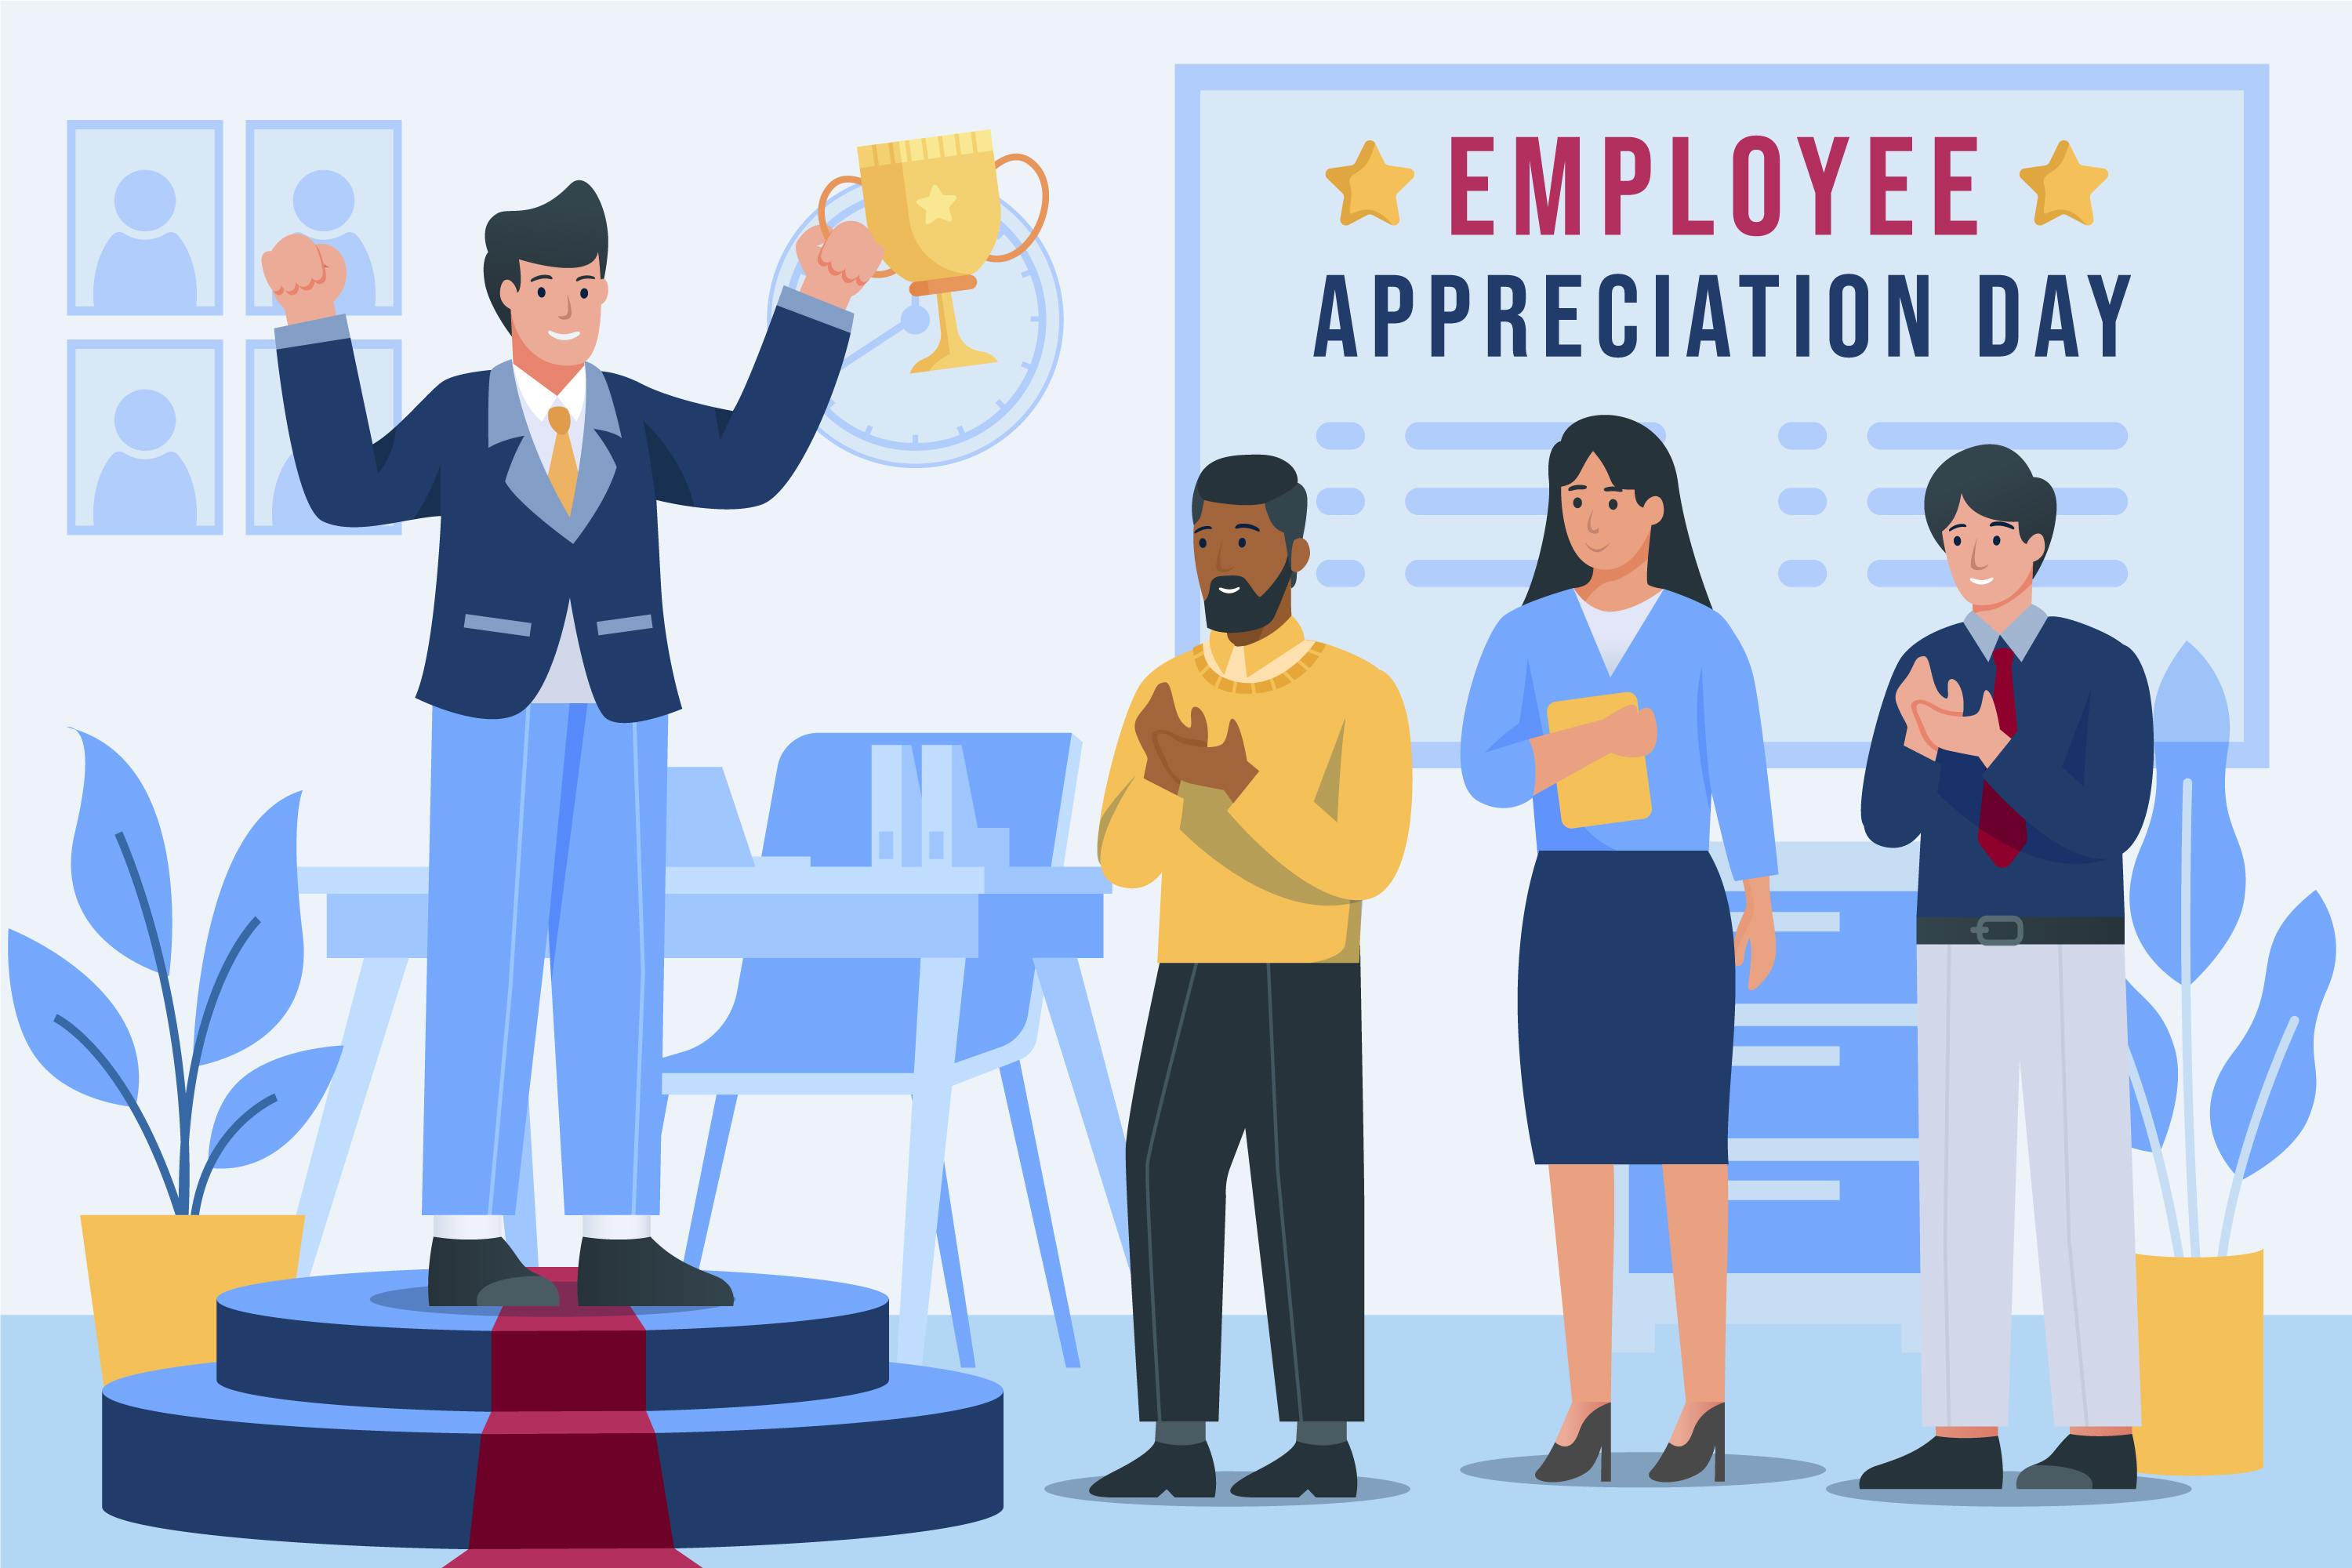 employee appreciation guide image Introimage